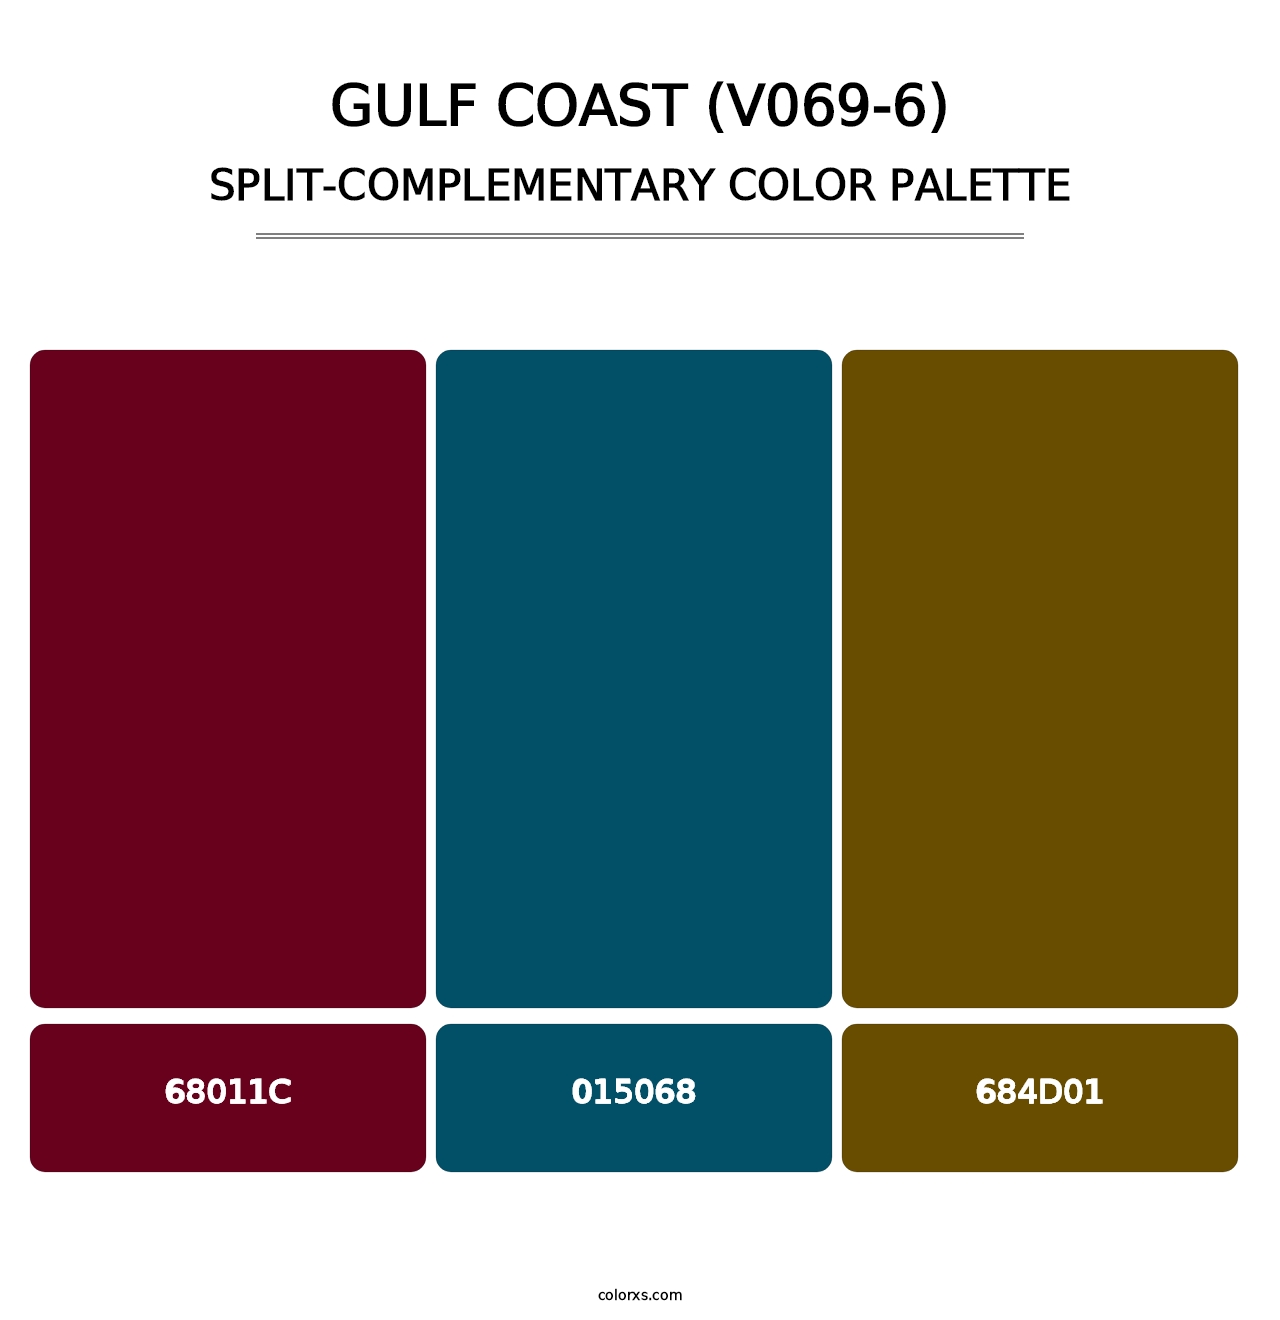 Gulf Coast (V069-6) - Split-Complementary Color Palette